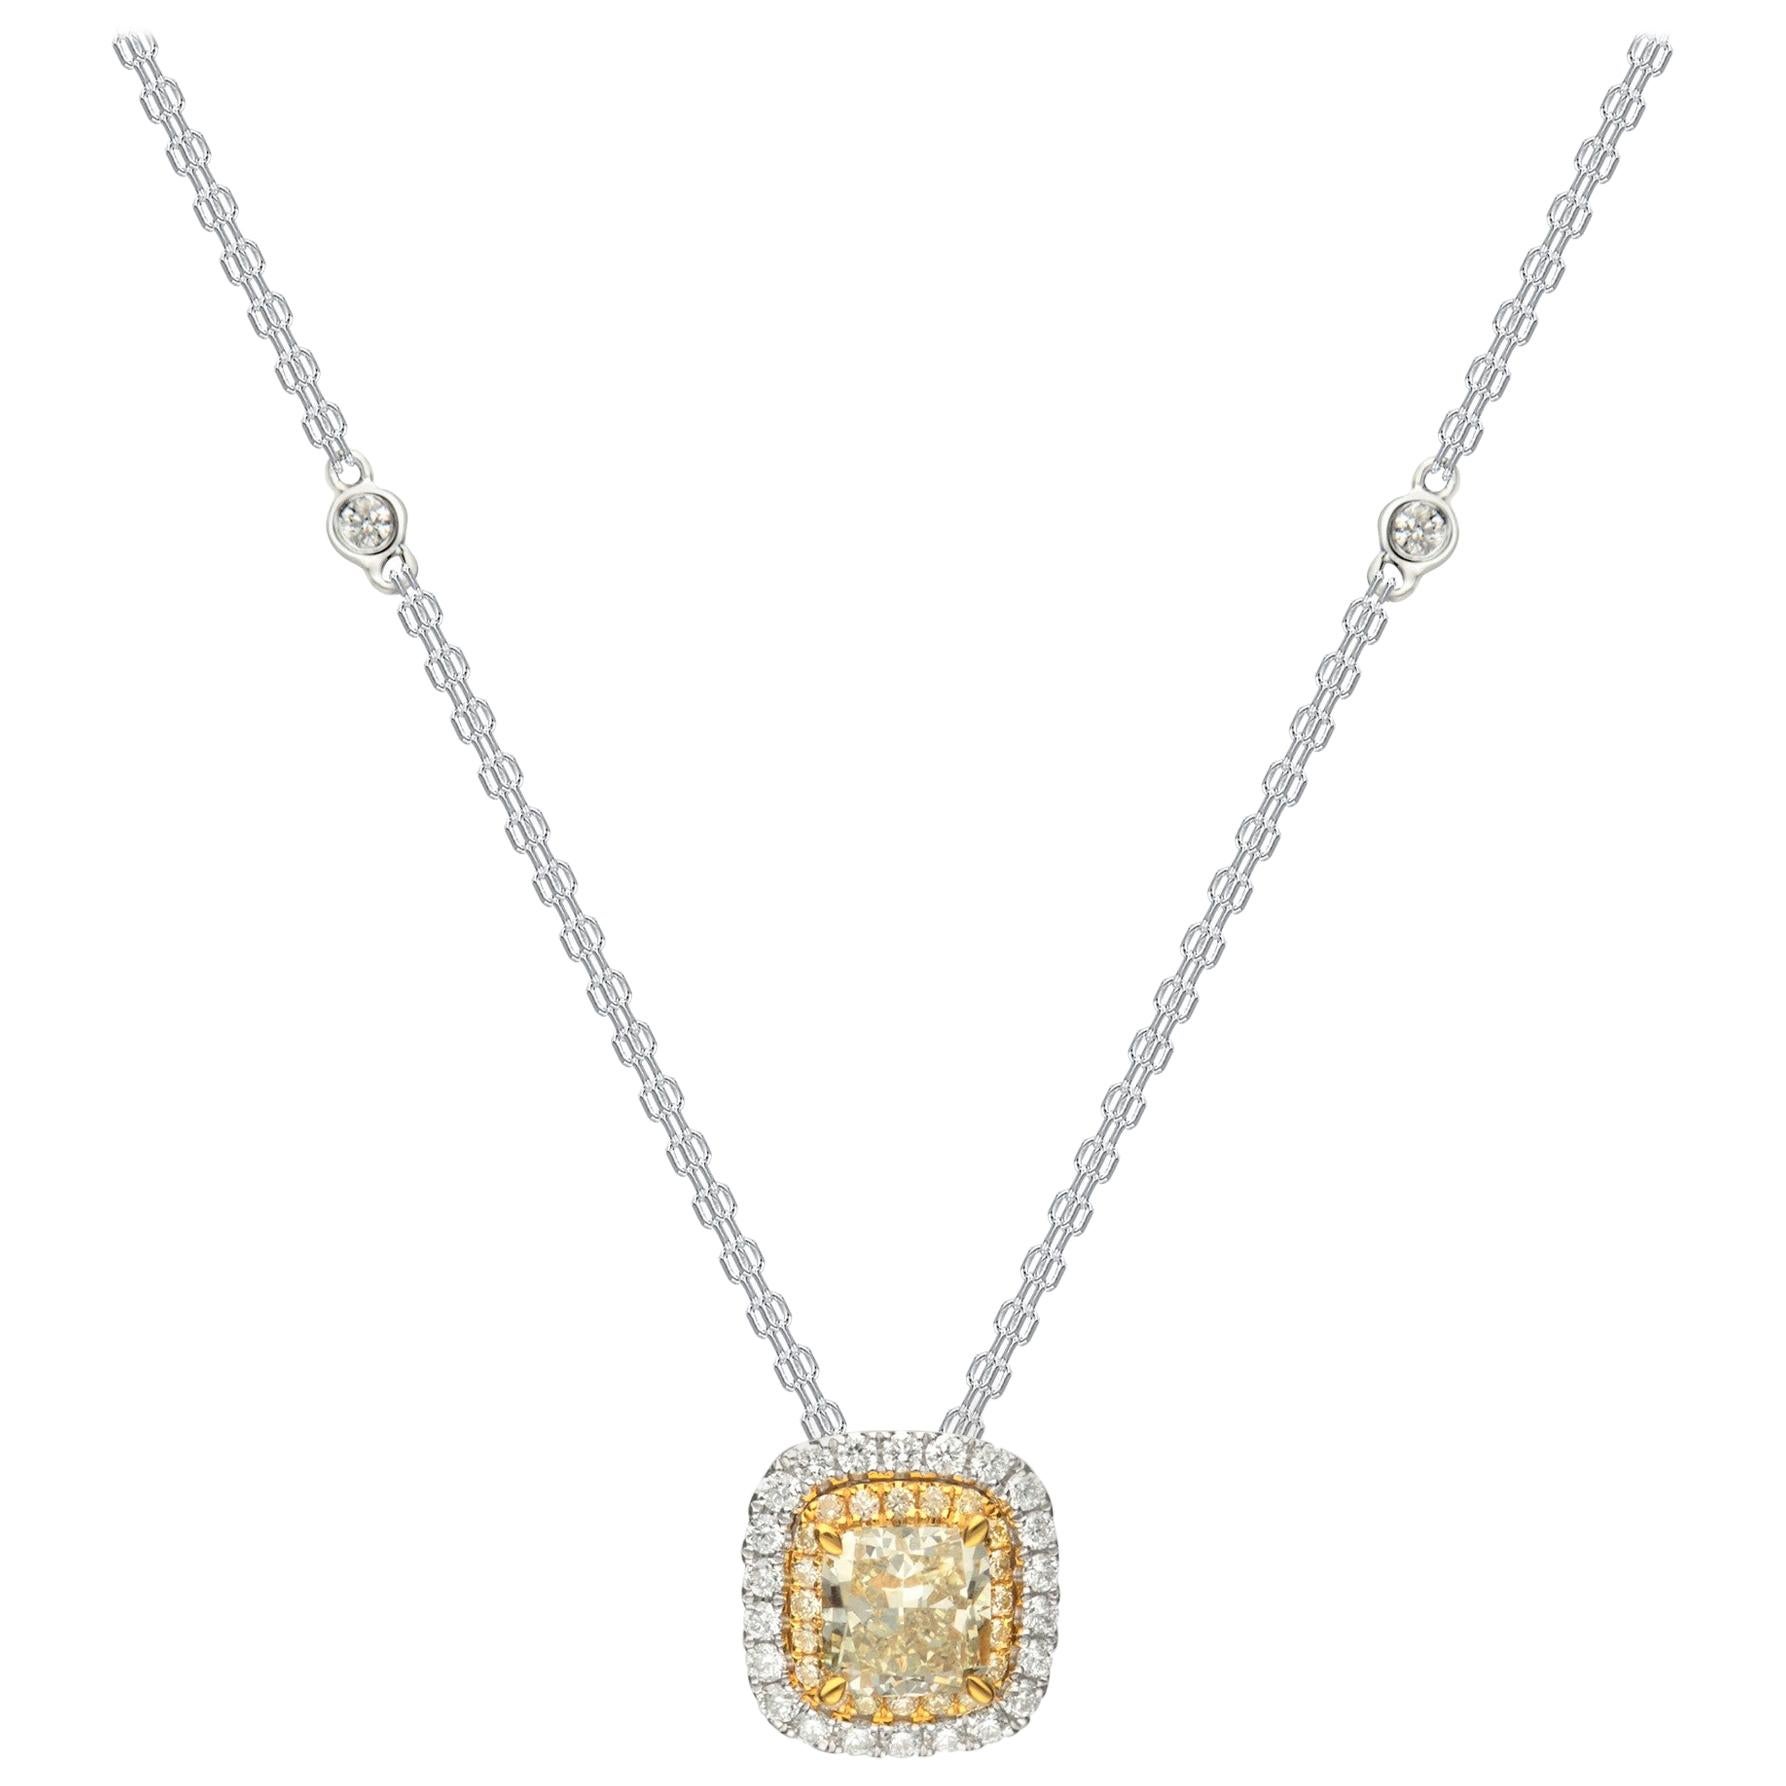 Collier pendentif en or bicolore 18 carats avec diamants jaunes de 1,03 carat